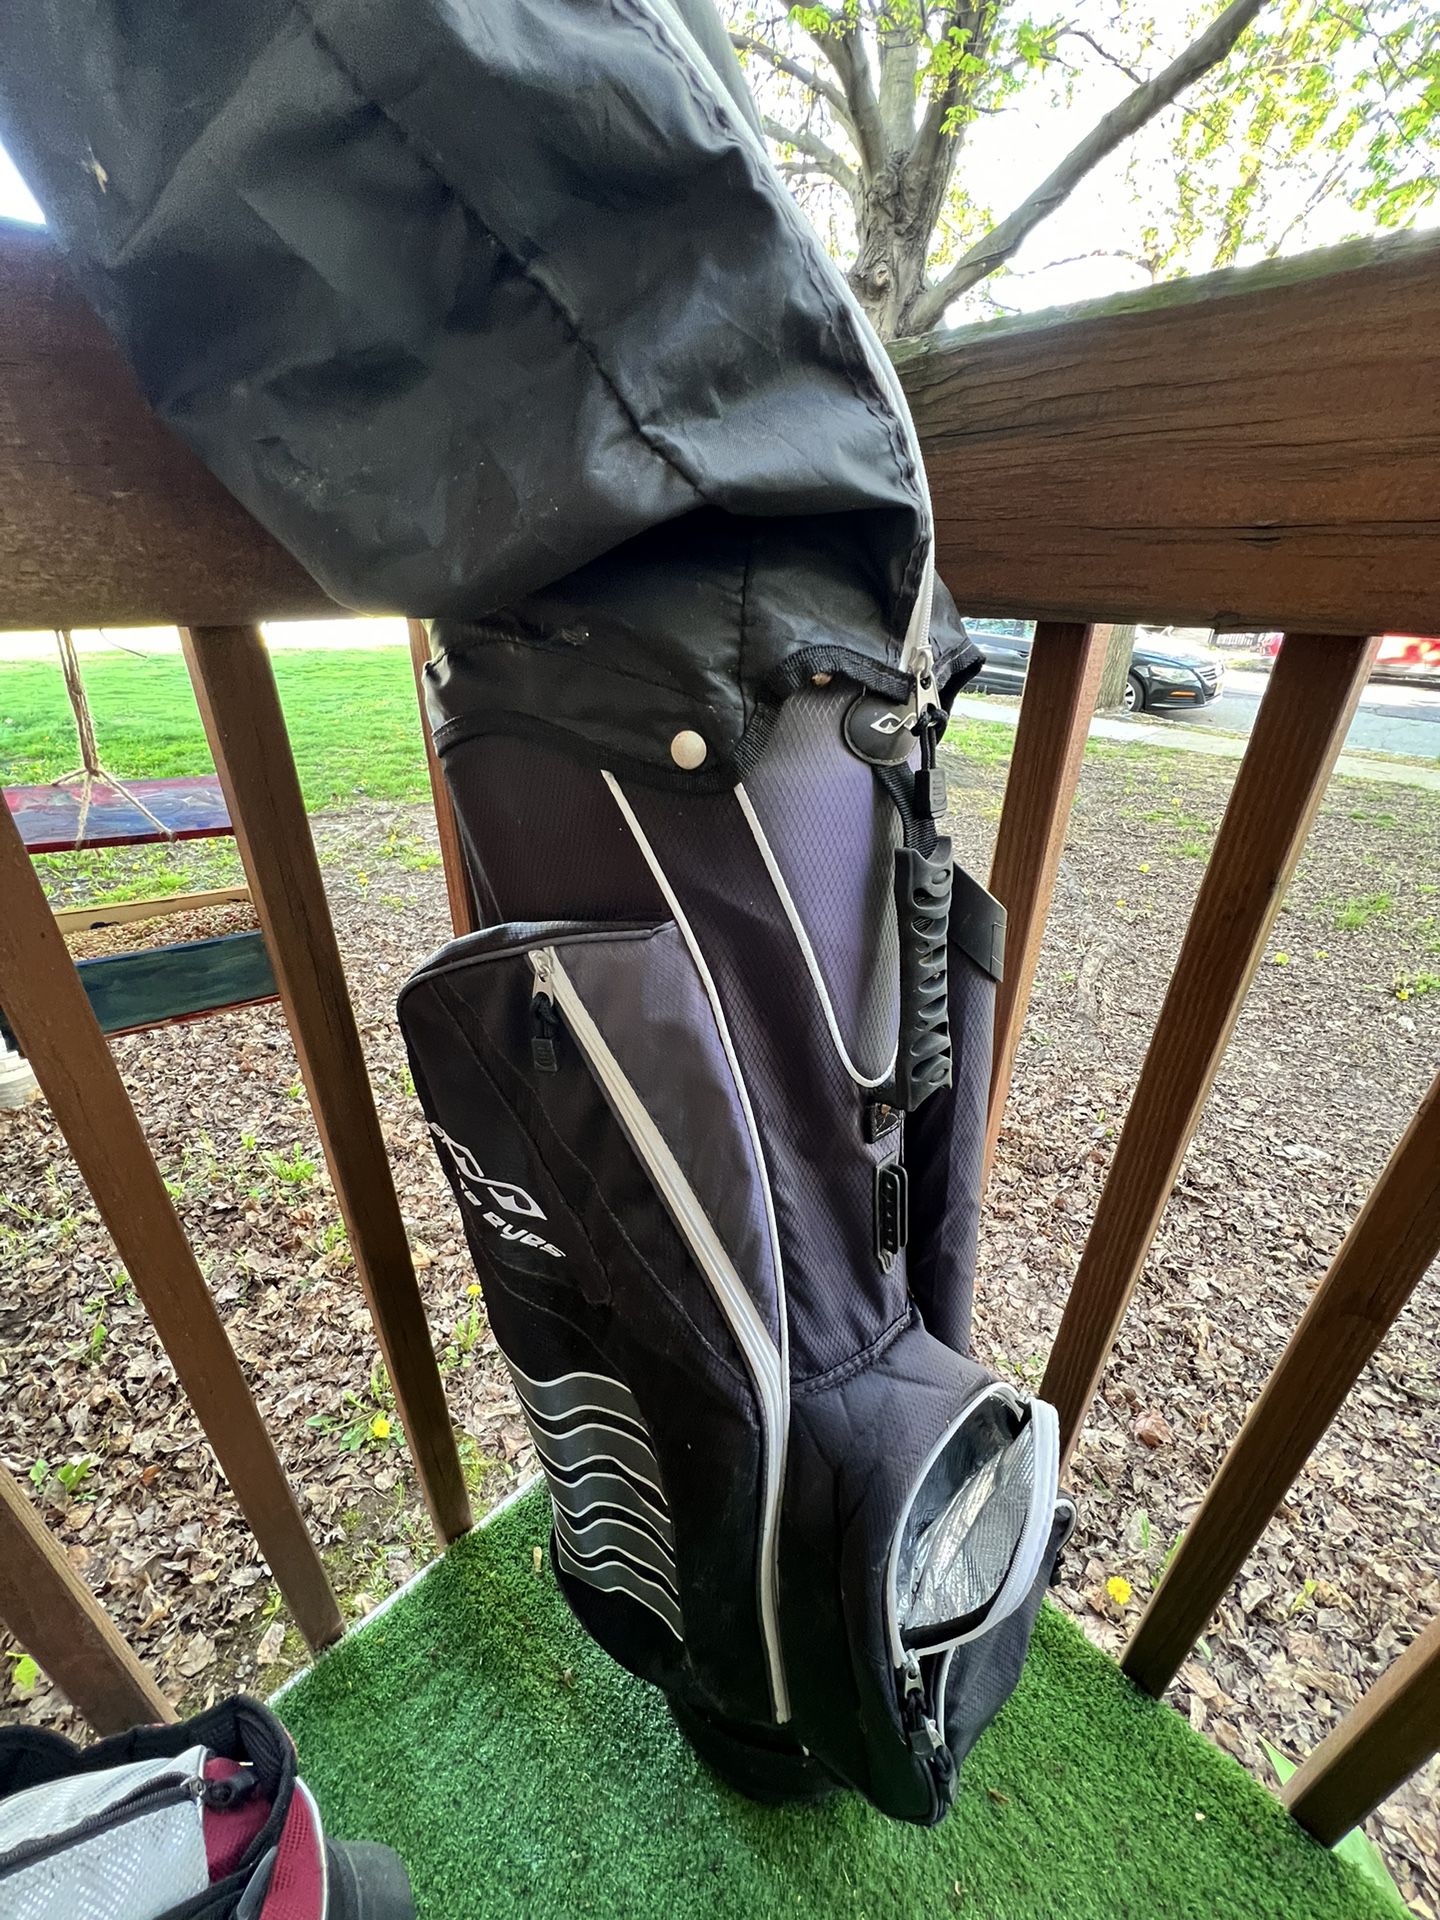 Snake Eyes Golf Cart Bag With Drink Cooler & 6 Golf Irons 